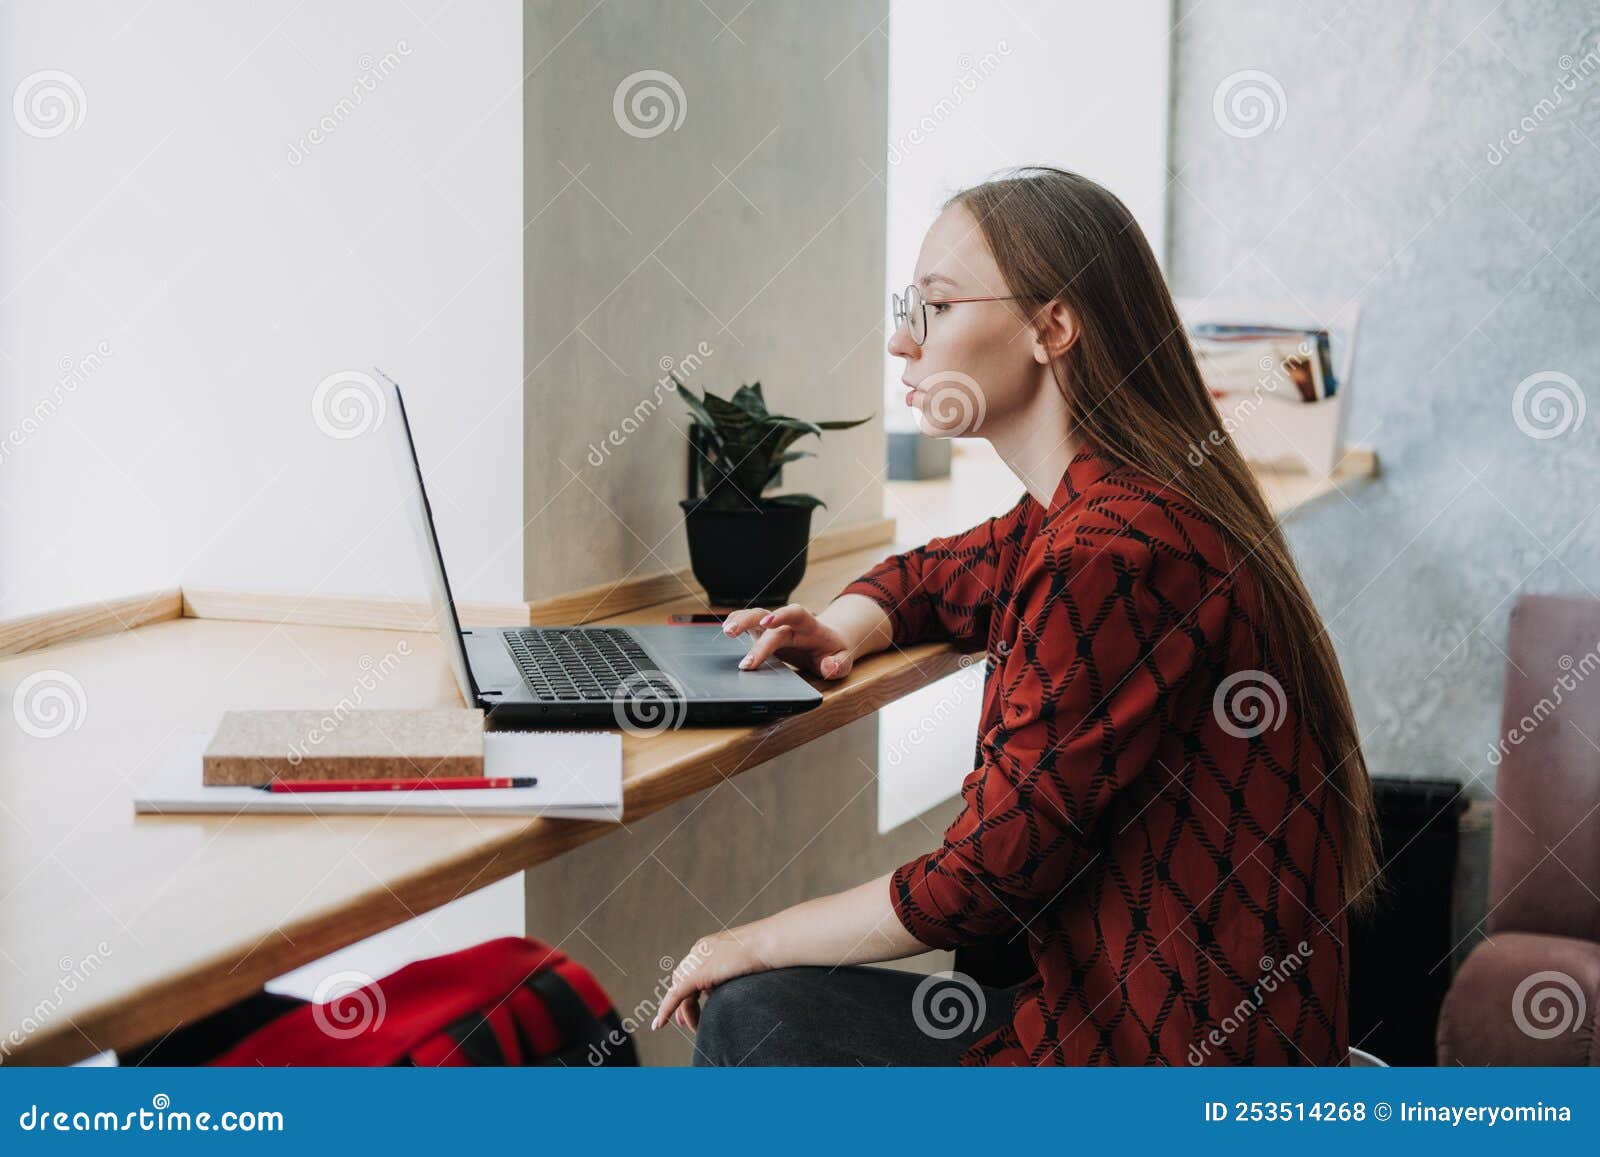 make money online, blogging, ebusiness. young woman, freelancer, student girl using laptop